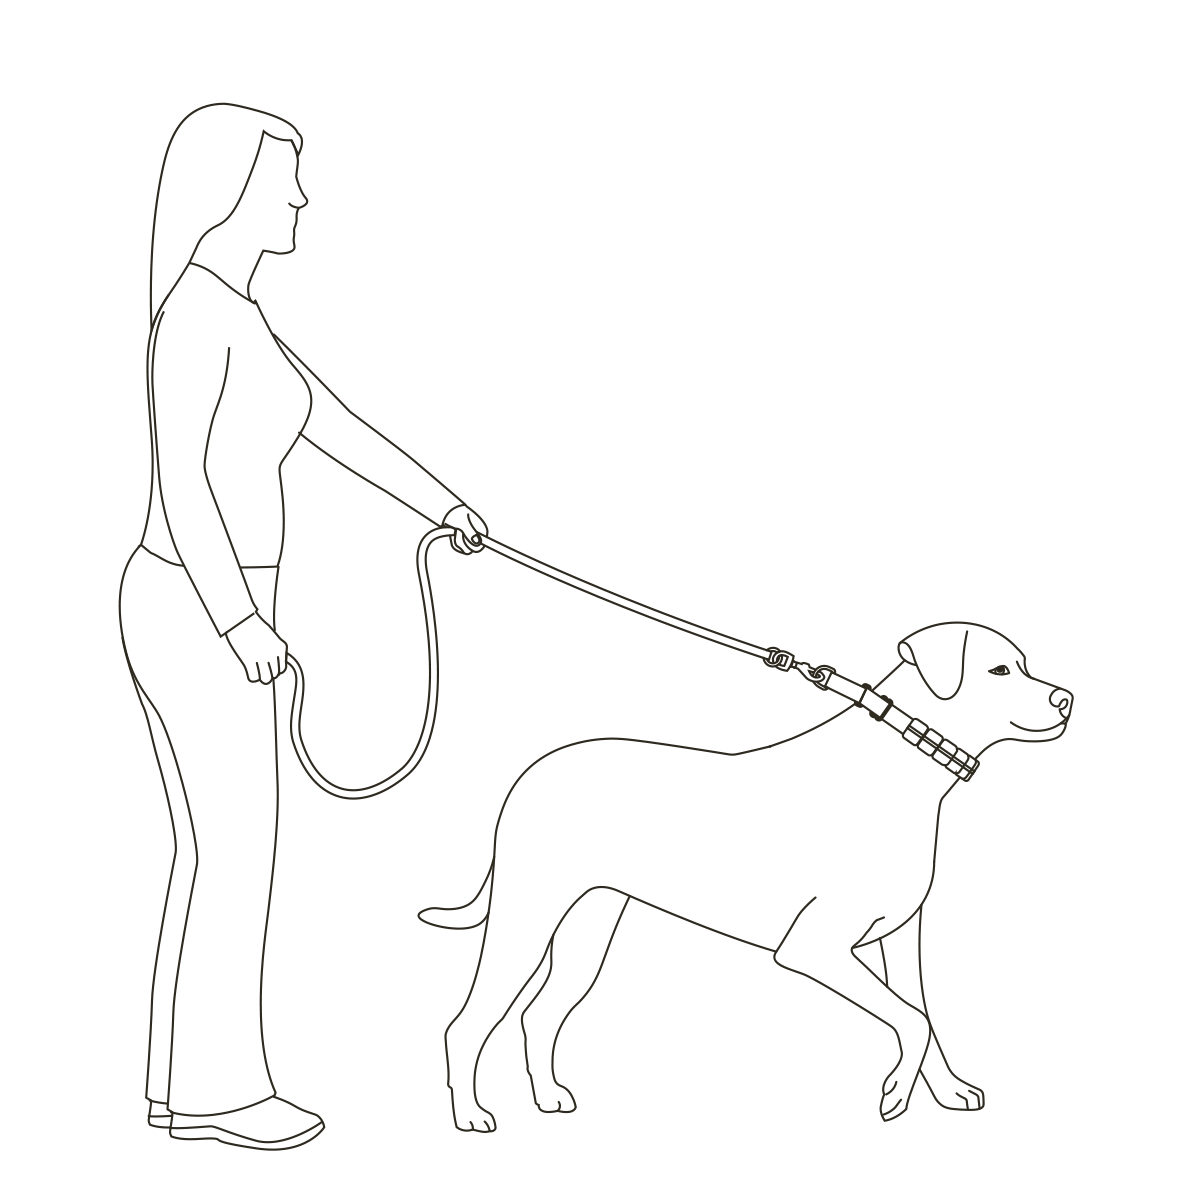 training-dog-with-soft-point-training-collar-illustration2